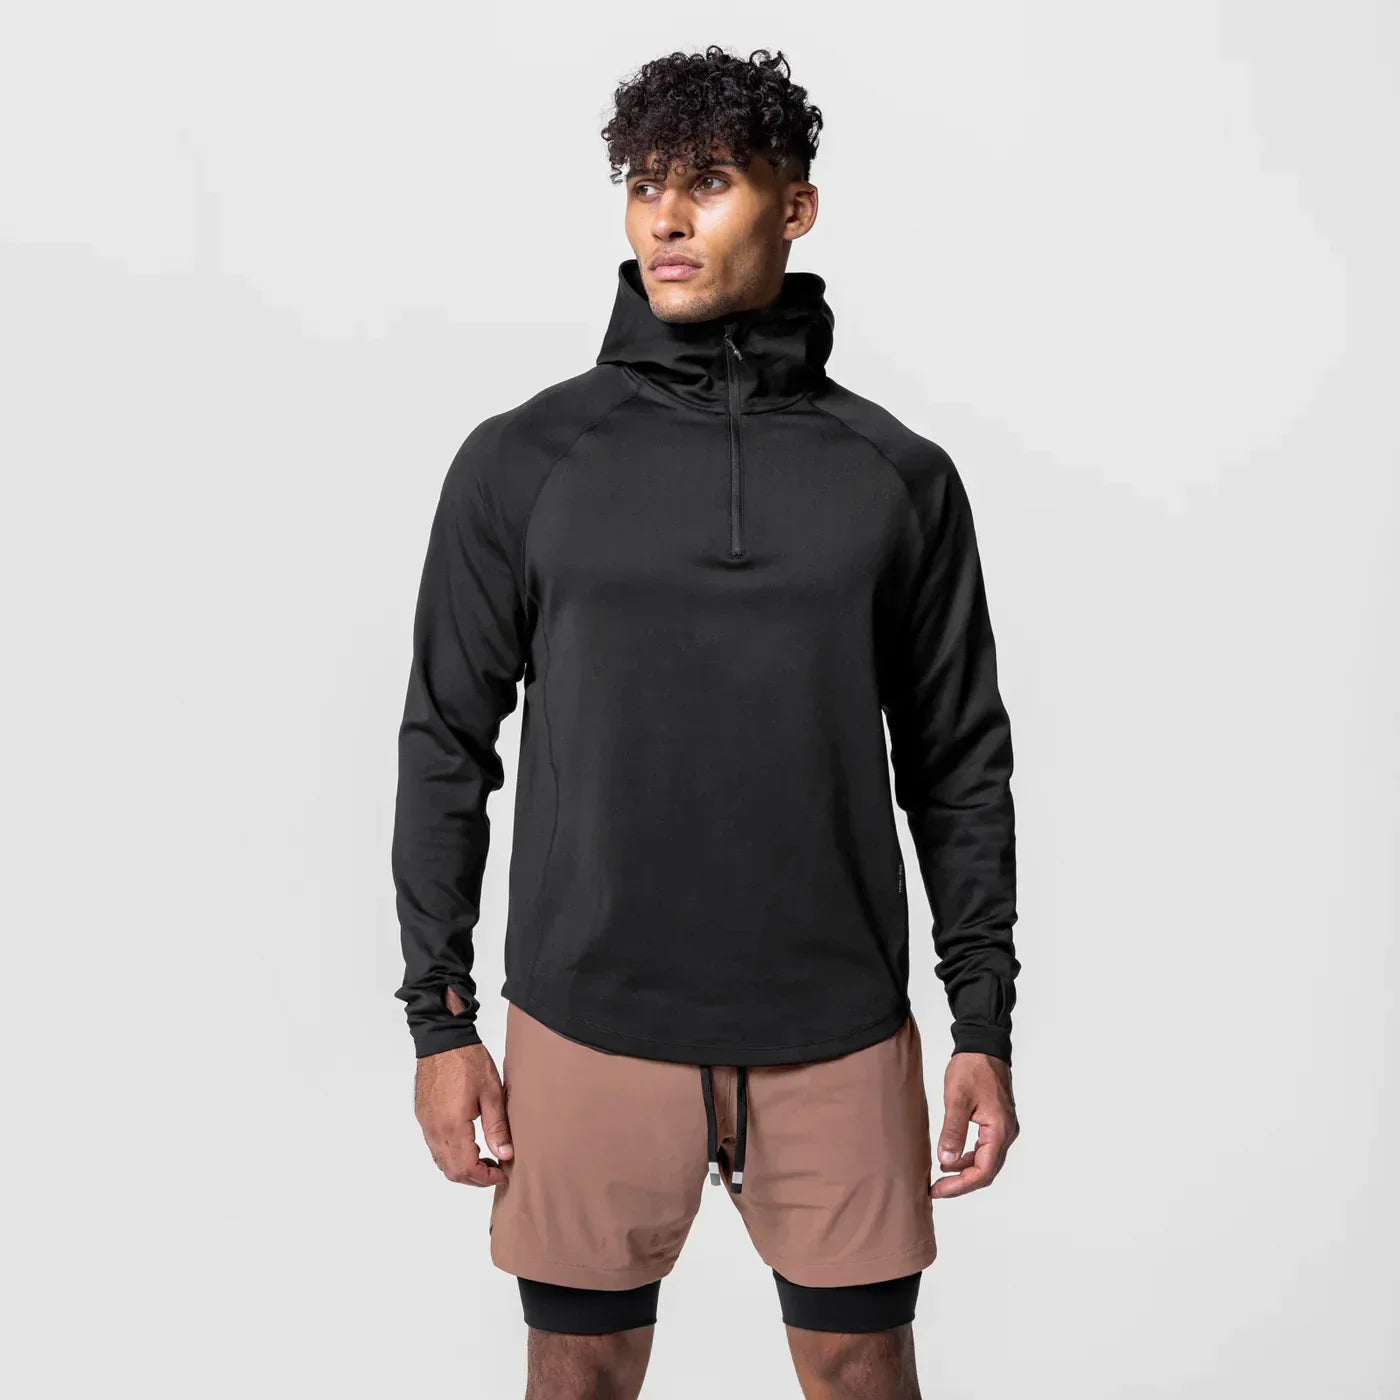 Men Oversized Pullover Hoodie Cotton Loose Sportswear Joggers Gym Sports Fitness Running Training Coat Casual Fashion Sweatshirt